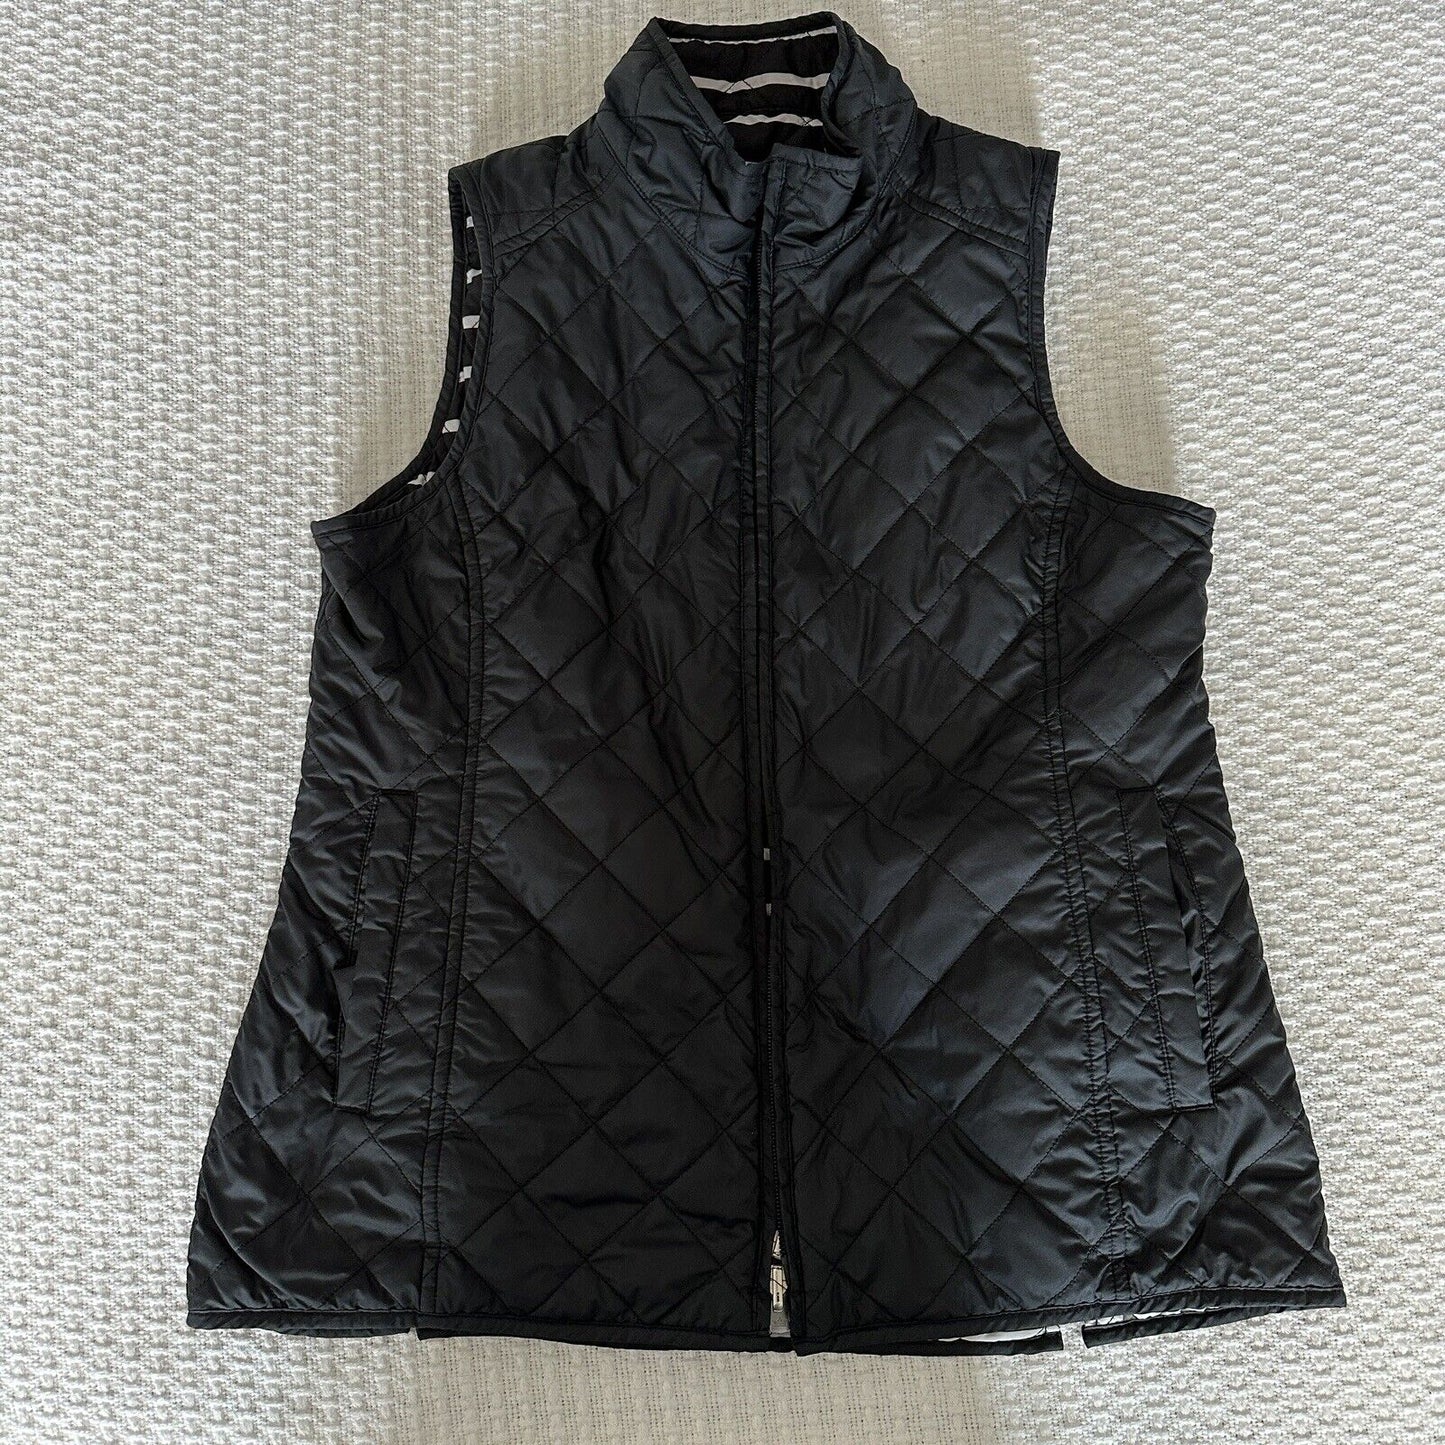 Peter Millar Vest Women's Size Medium Reversible Quilted Black White Striped